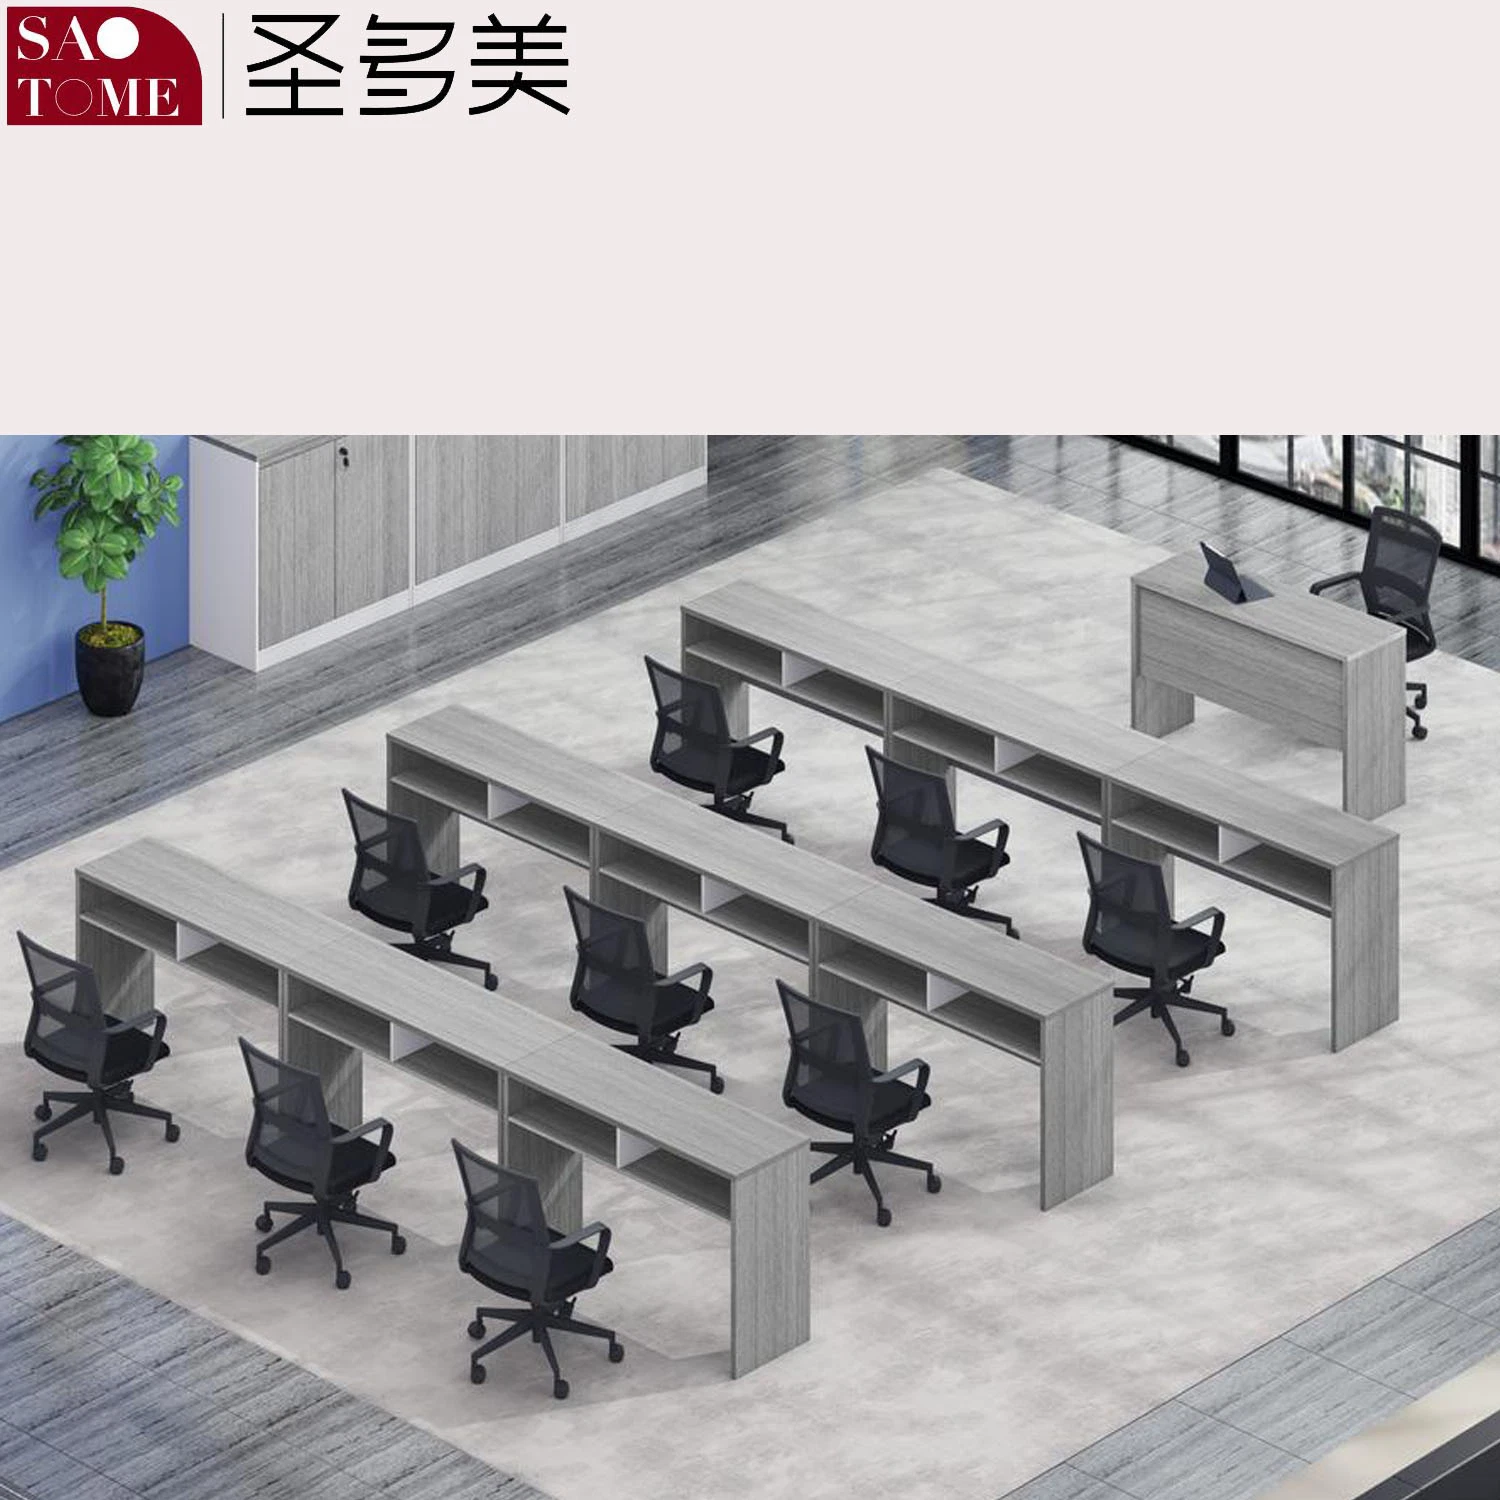 Moderne Bürobedarf Büromöbel Schreibtisch Executive Schreibtisch Executive Tisch